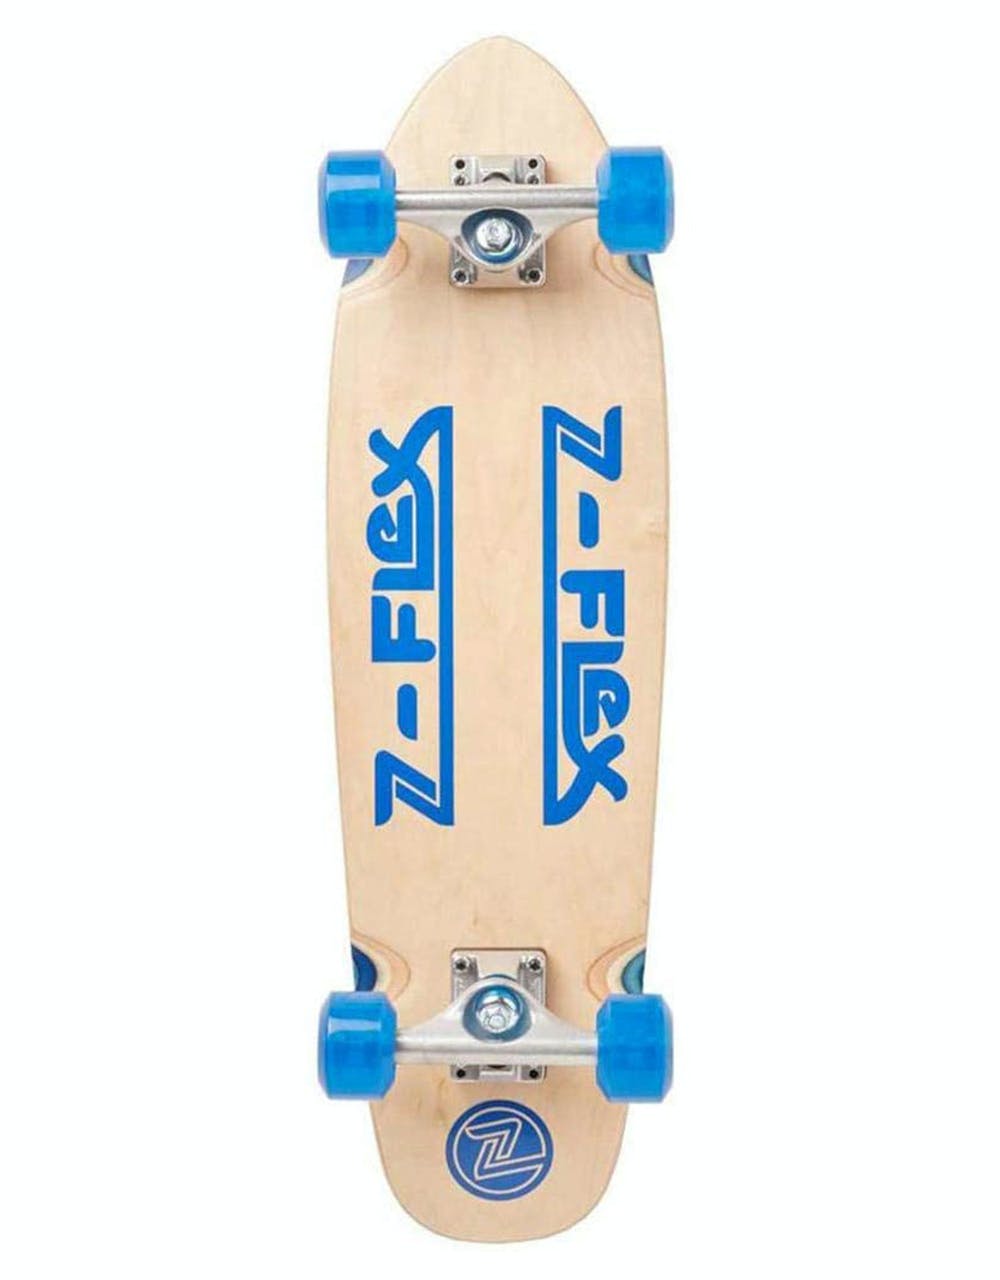 Z Flex Retro Classic Cruiser Skateboard - 7.875" x 27"